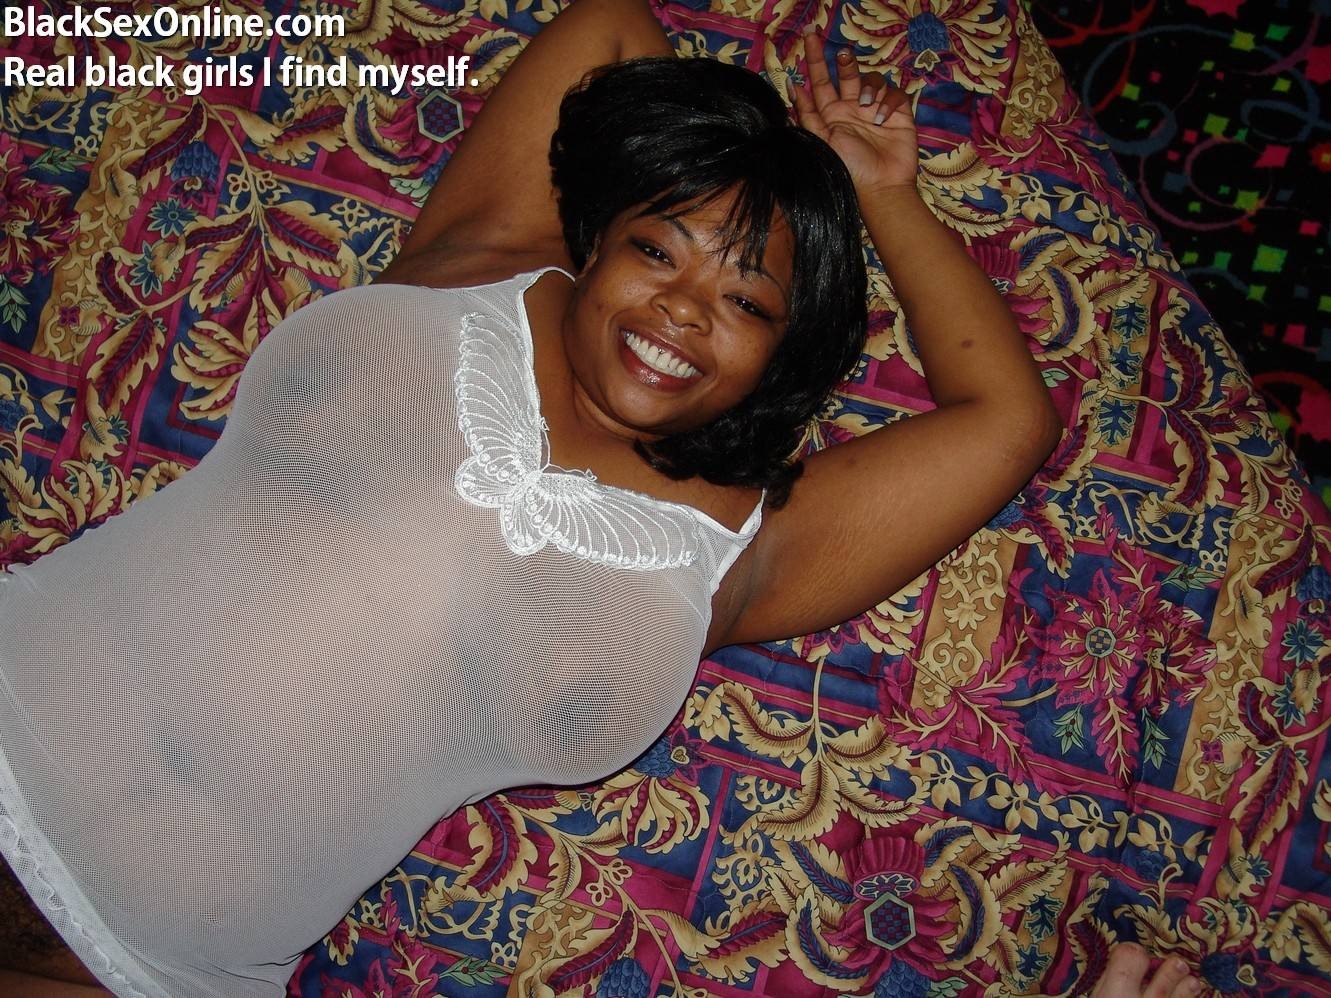 Primera vez chica amateur negro con enormes tetas floppy linda sonrisa
 #67297188